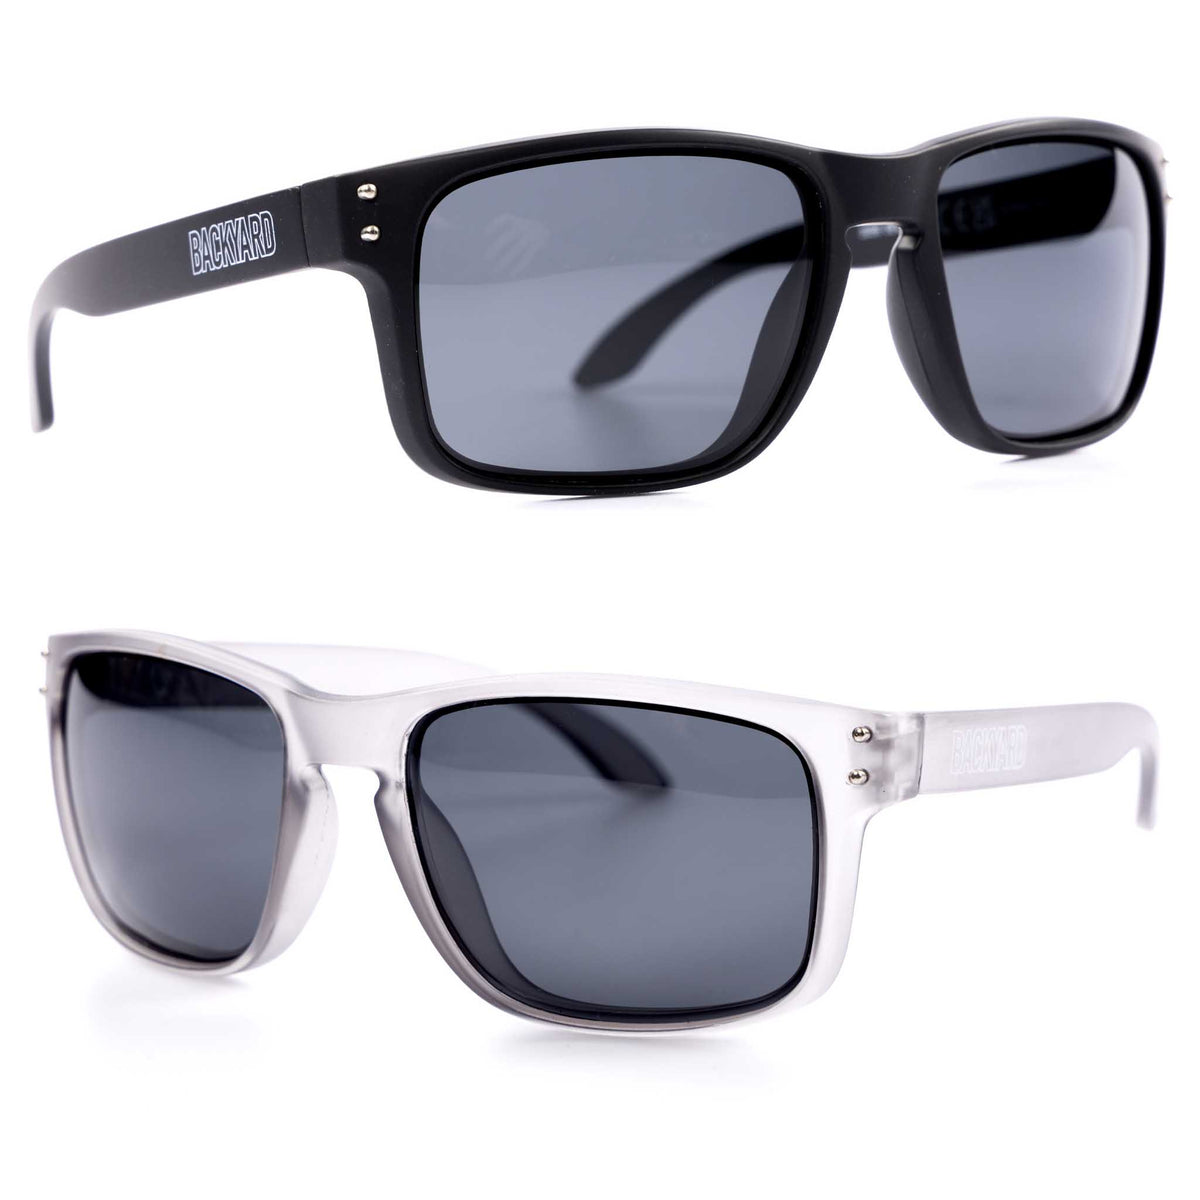 New Backyard BMX sunglasses and new BMX free gift options